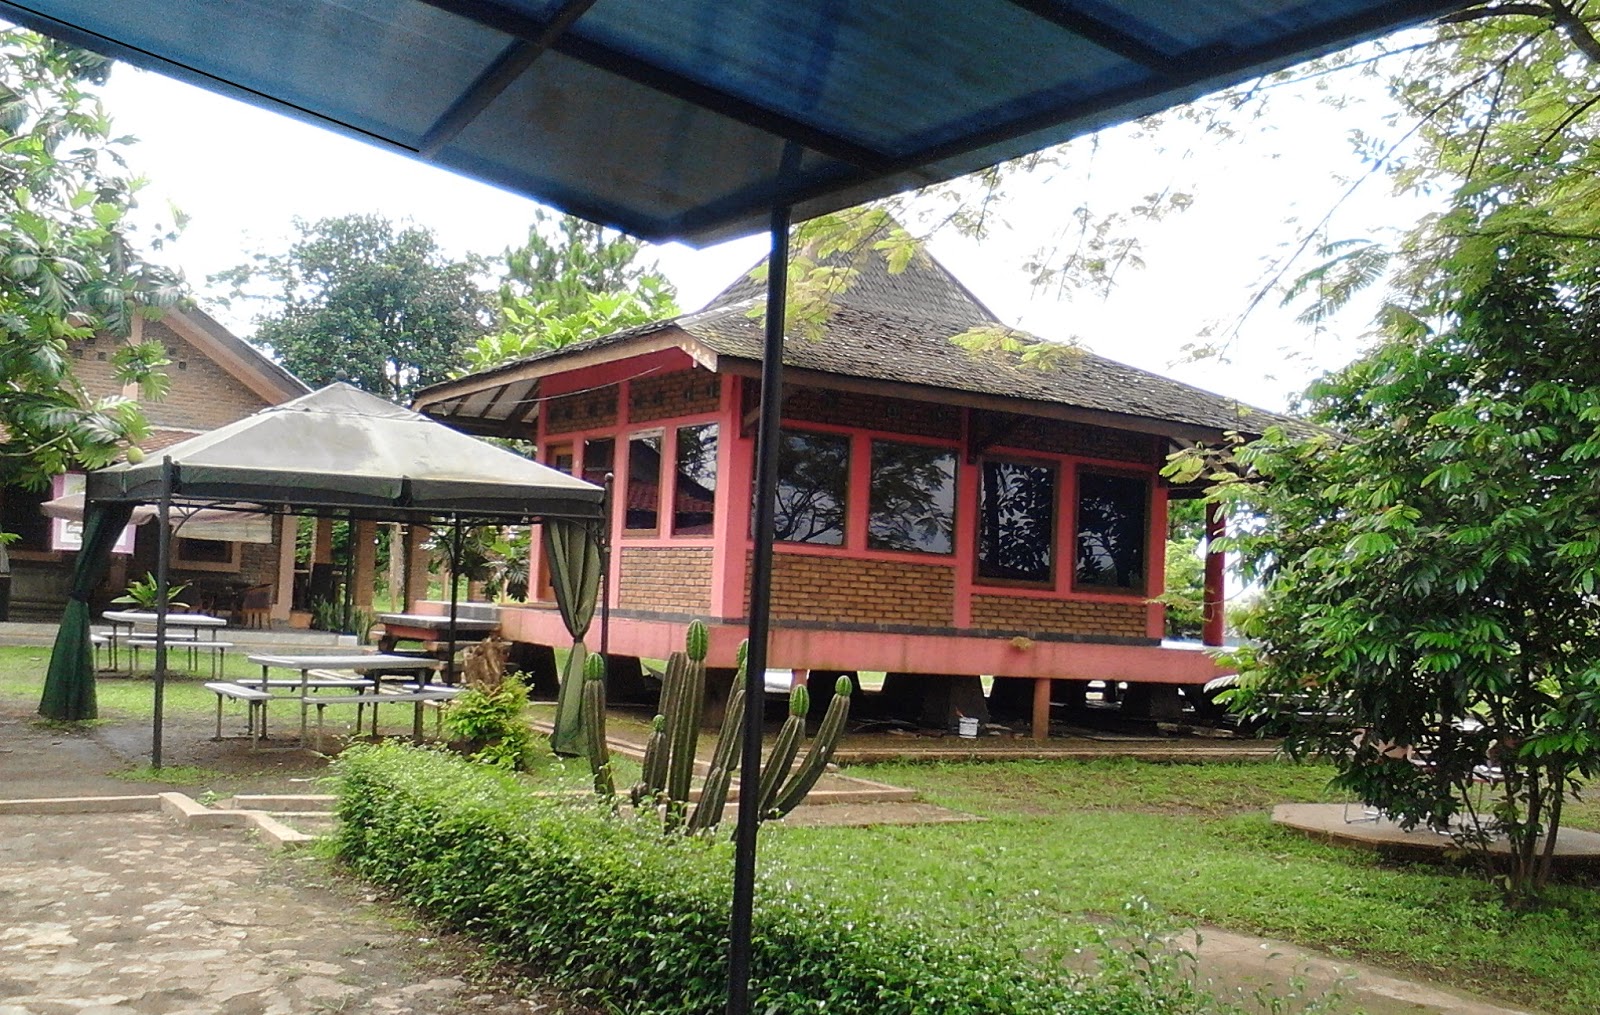 Wisata Villa Perancis Batujajar Bandung Barat